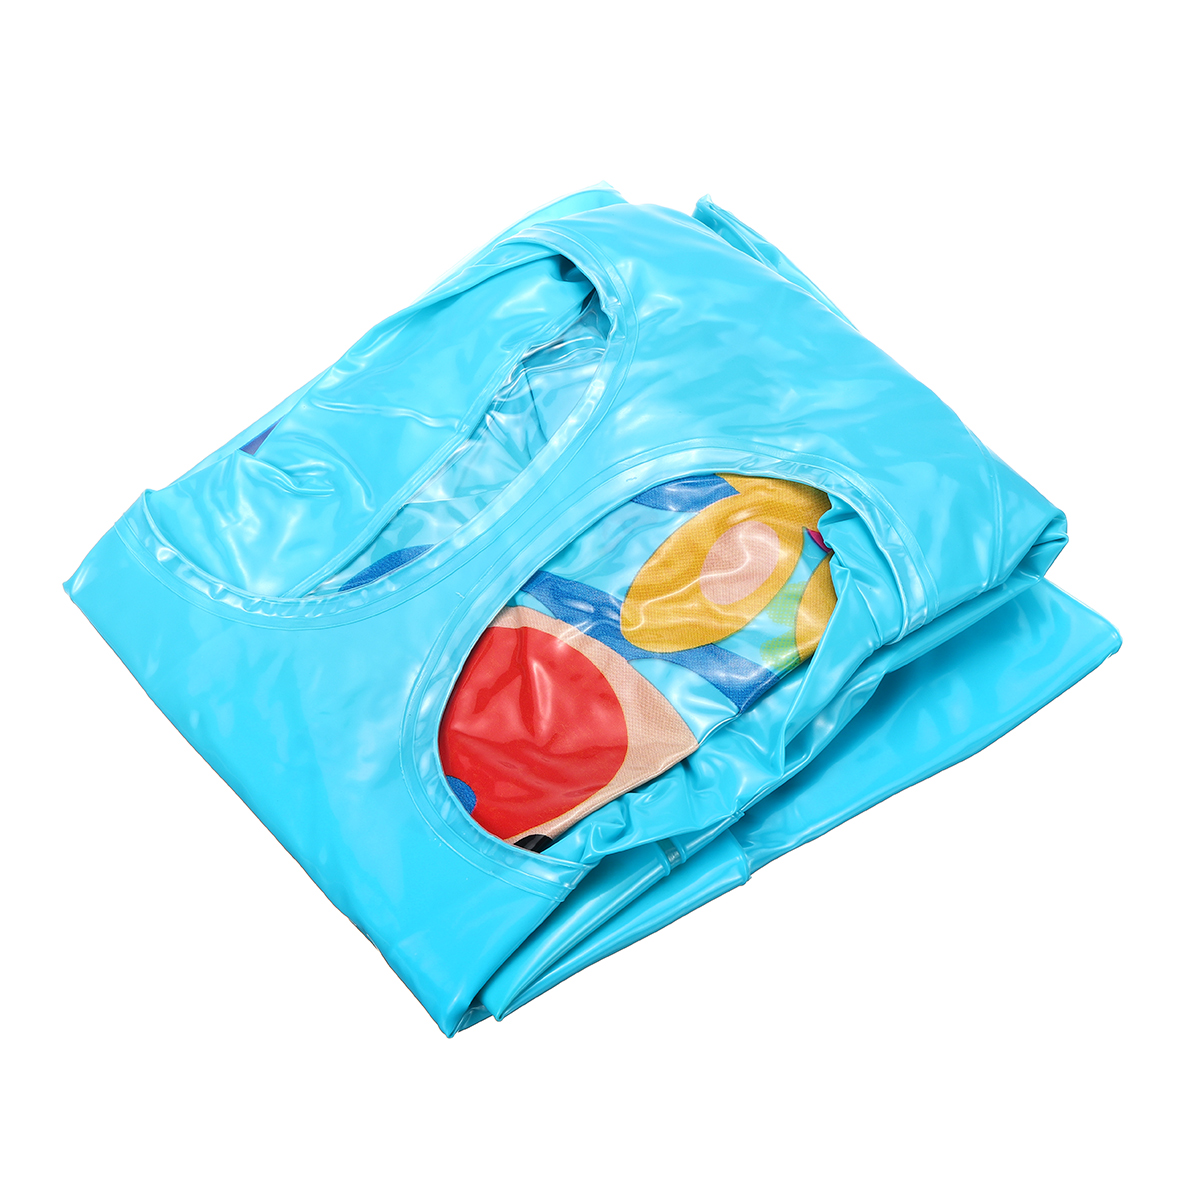 Inflatable-Sunshade-Kids-Float-Seat-Boat-Children-Swim-Swimming-Ring-Pool-Water-1568945-5